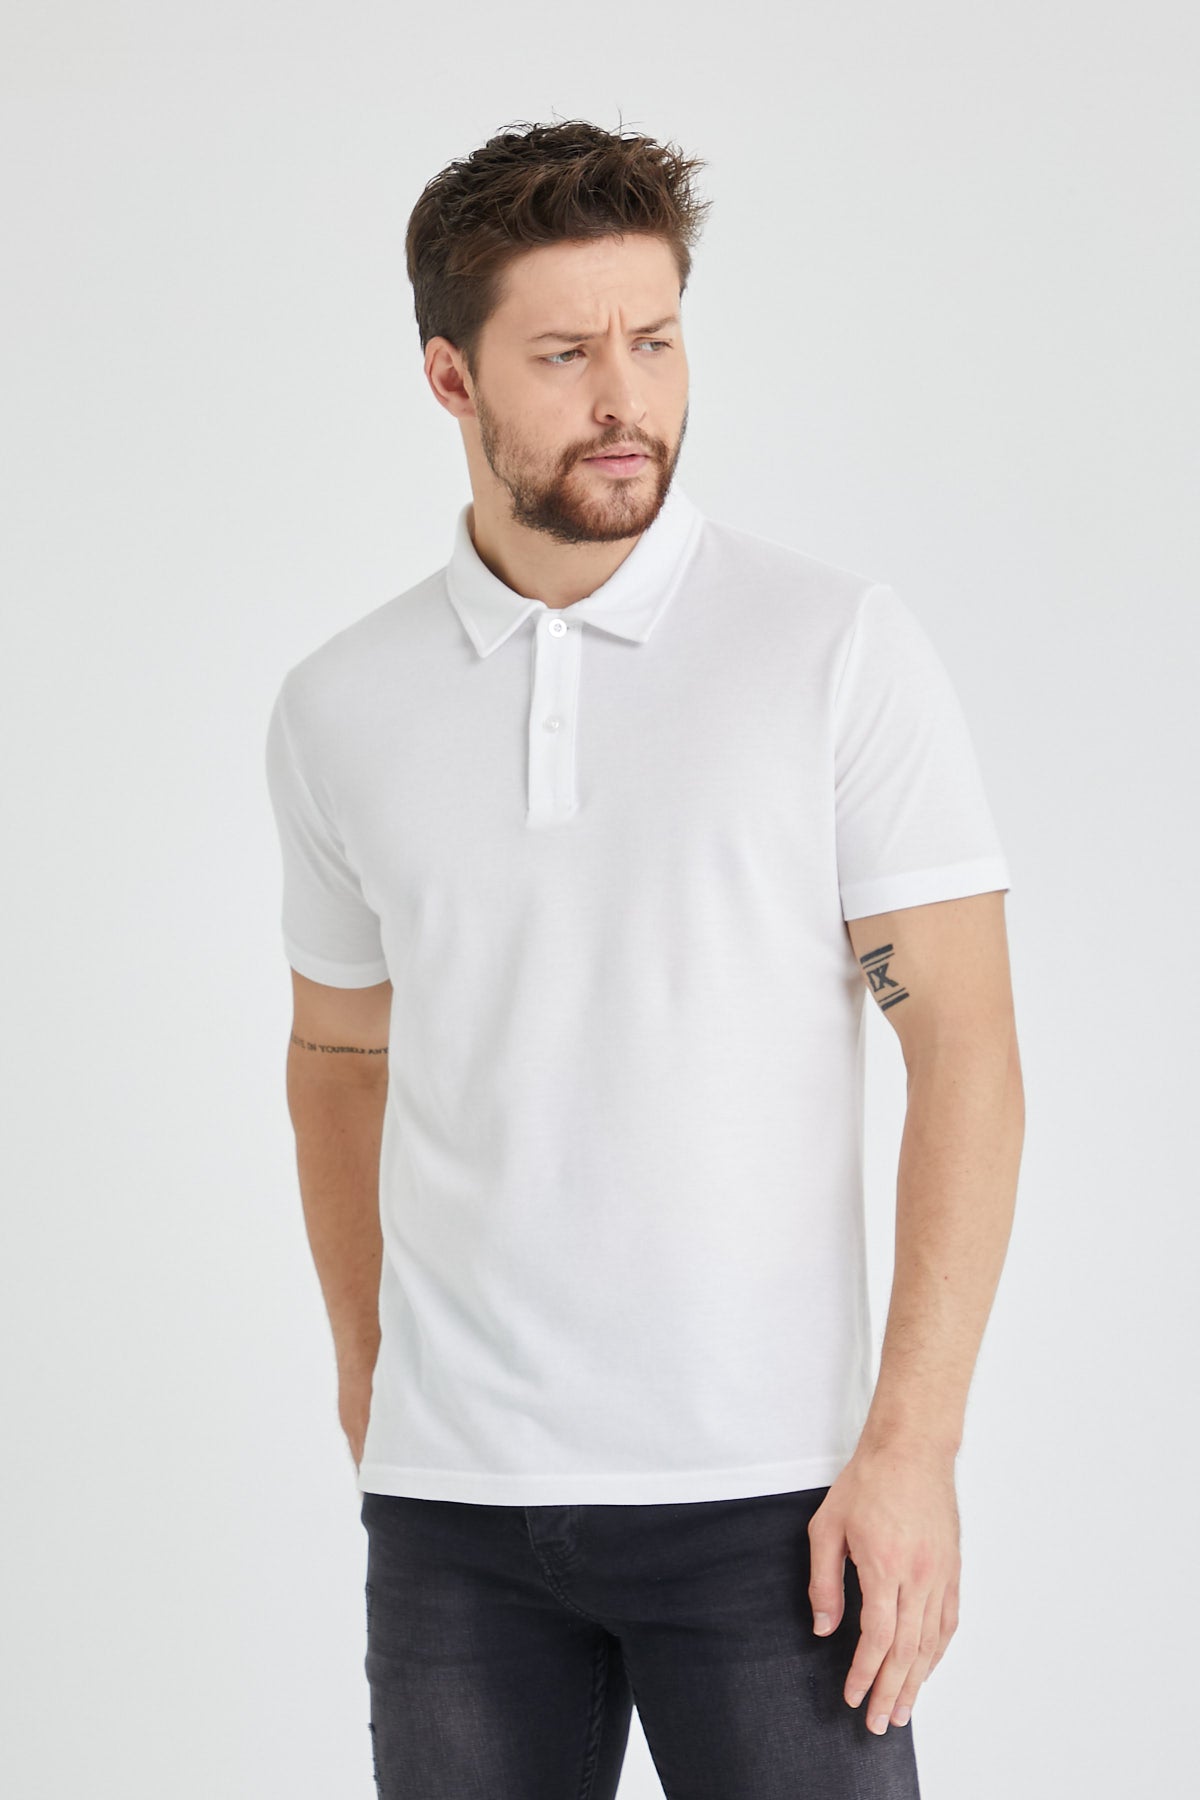 Men’s Classic Polo Shirts - 2 Button 100% Cotton Business Casual Shirt or  Golf Shirt